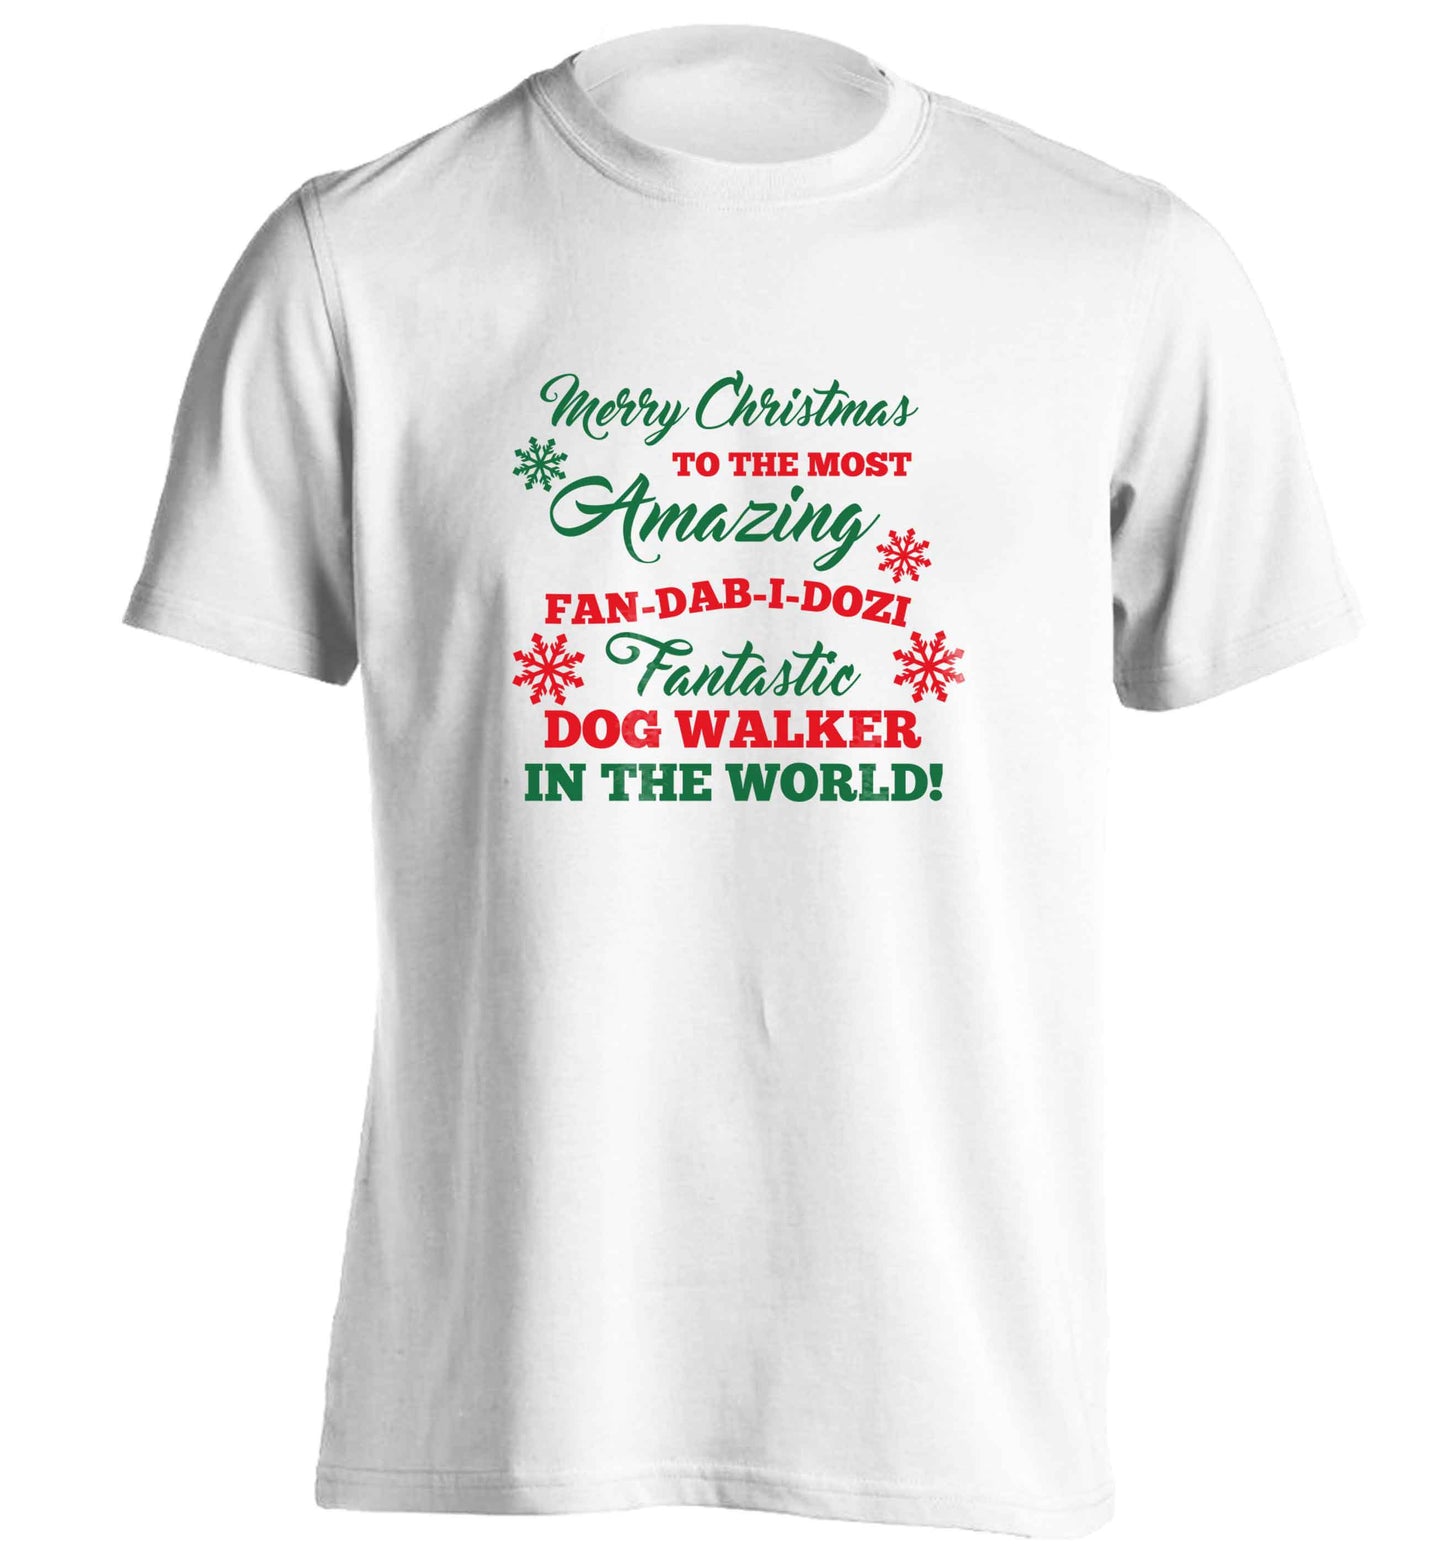 Merry Christmas to the most amazing fan-dab-i-dozi fantasic dog walker in the world adults unisex white Tshirt 2XL